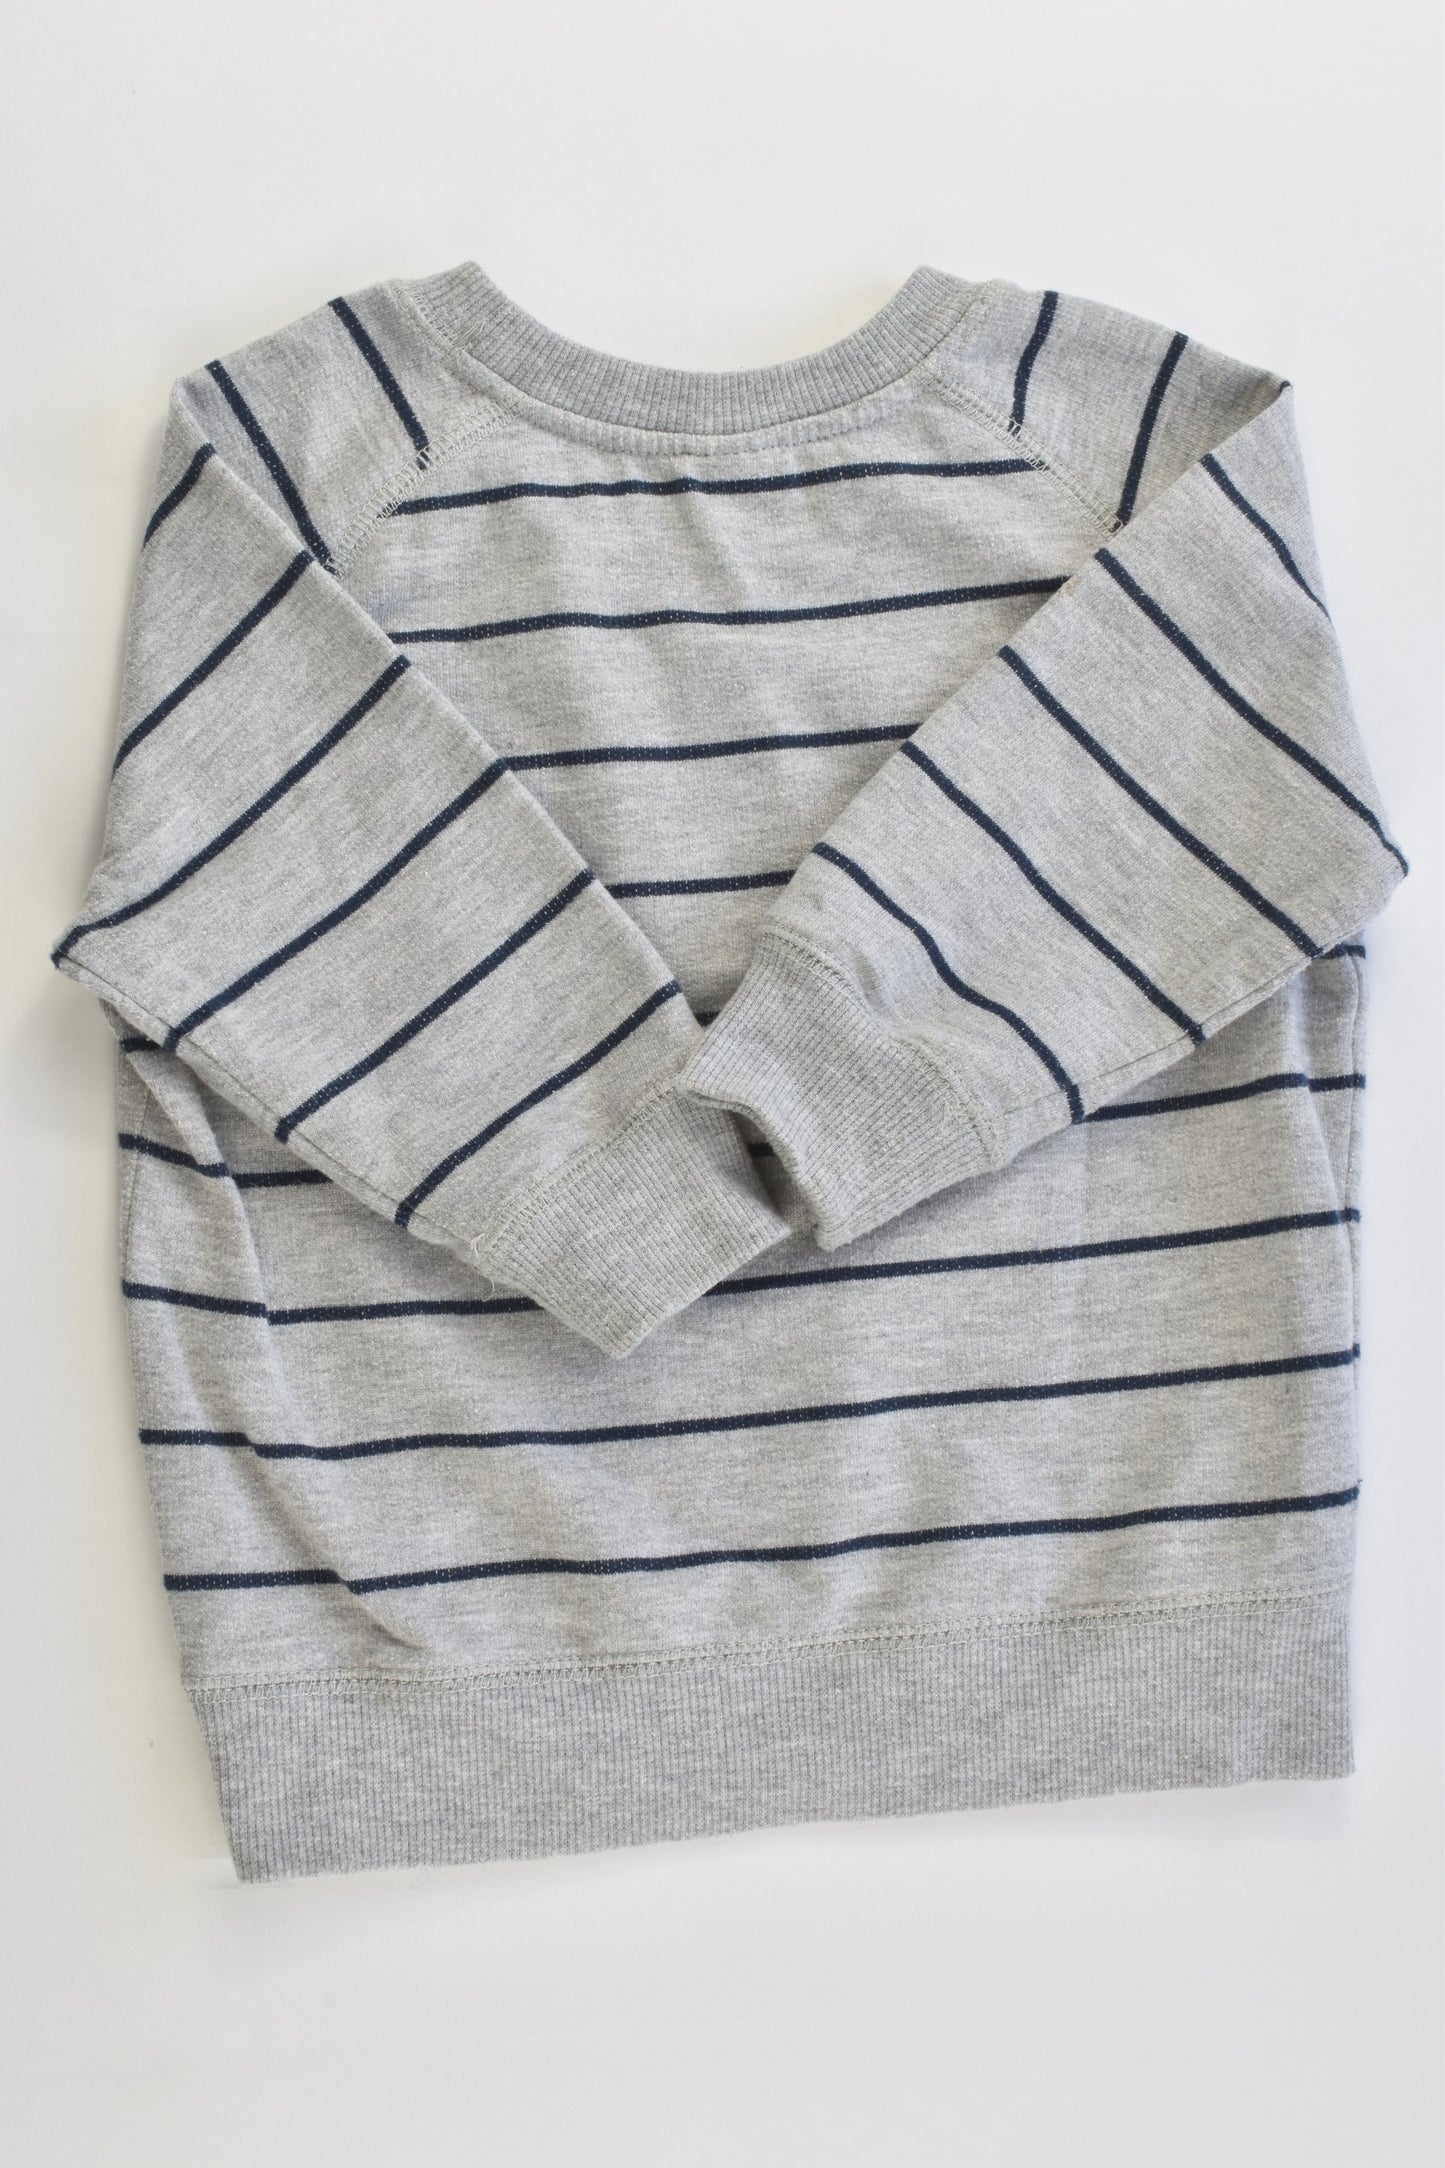 Anko Size 1 'Yay' Striped Sweater